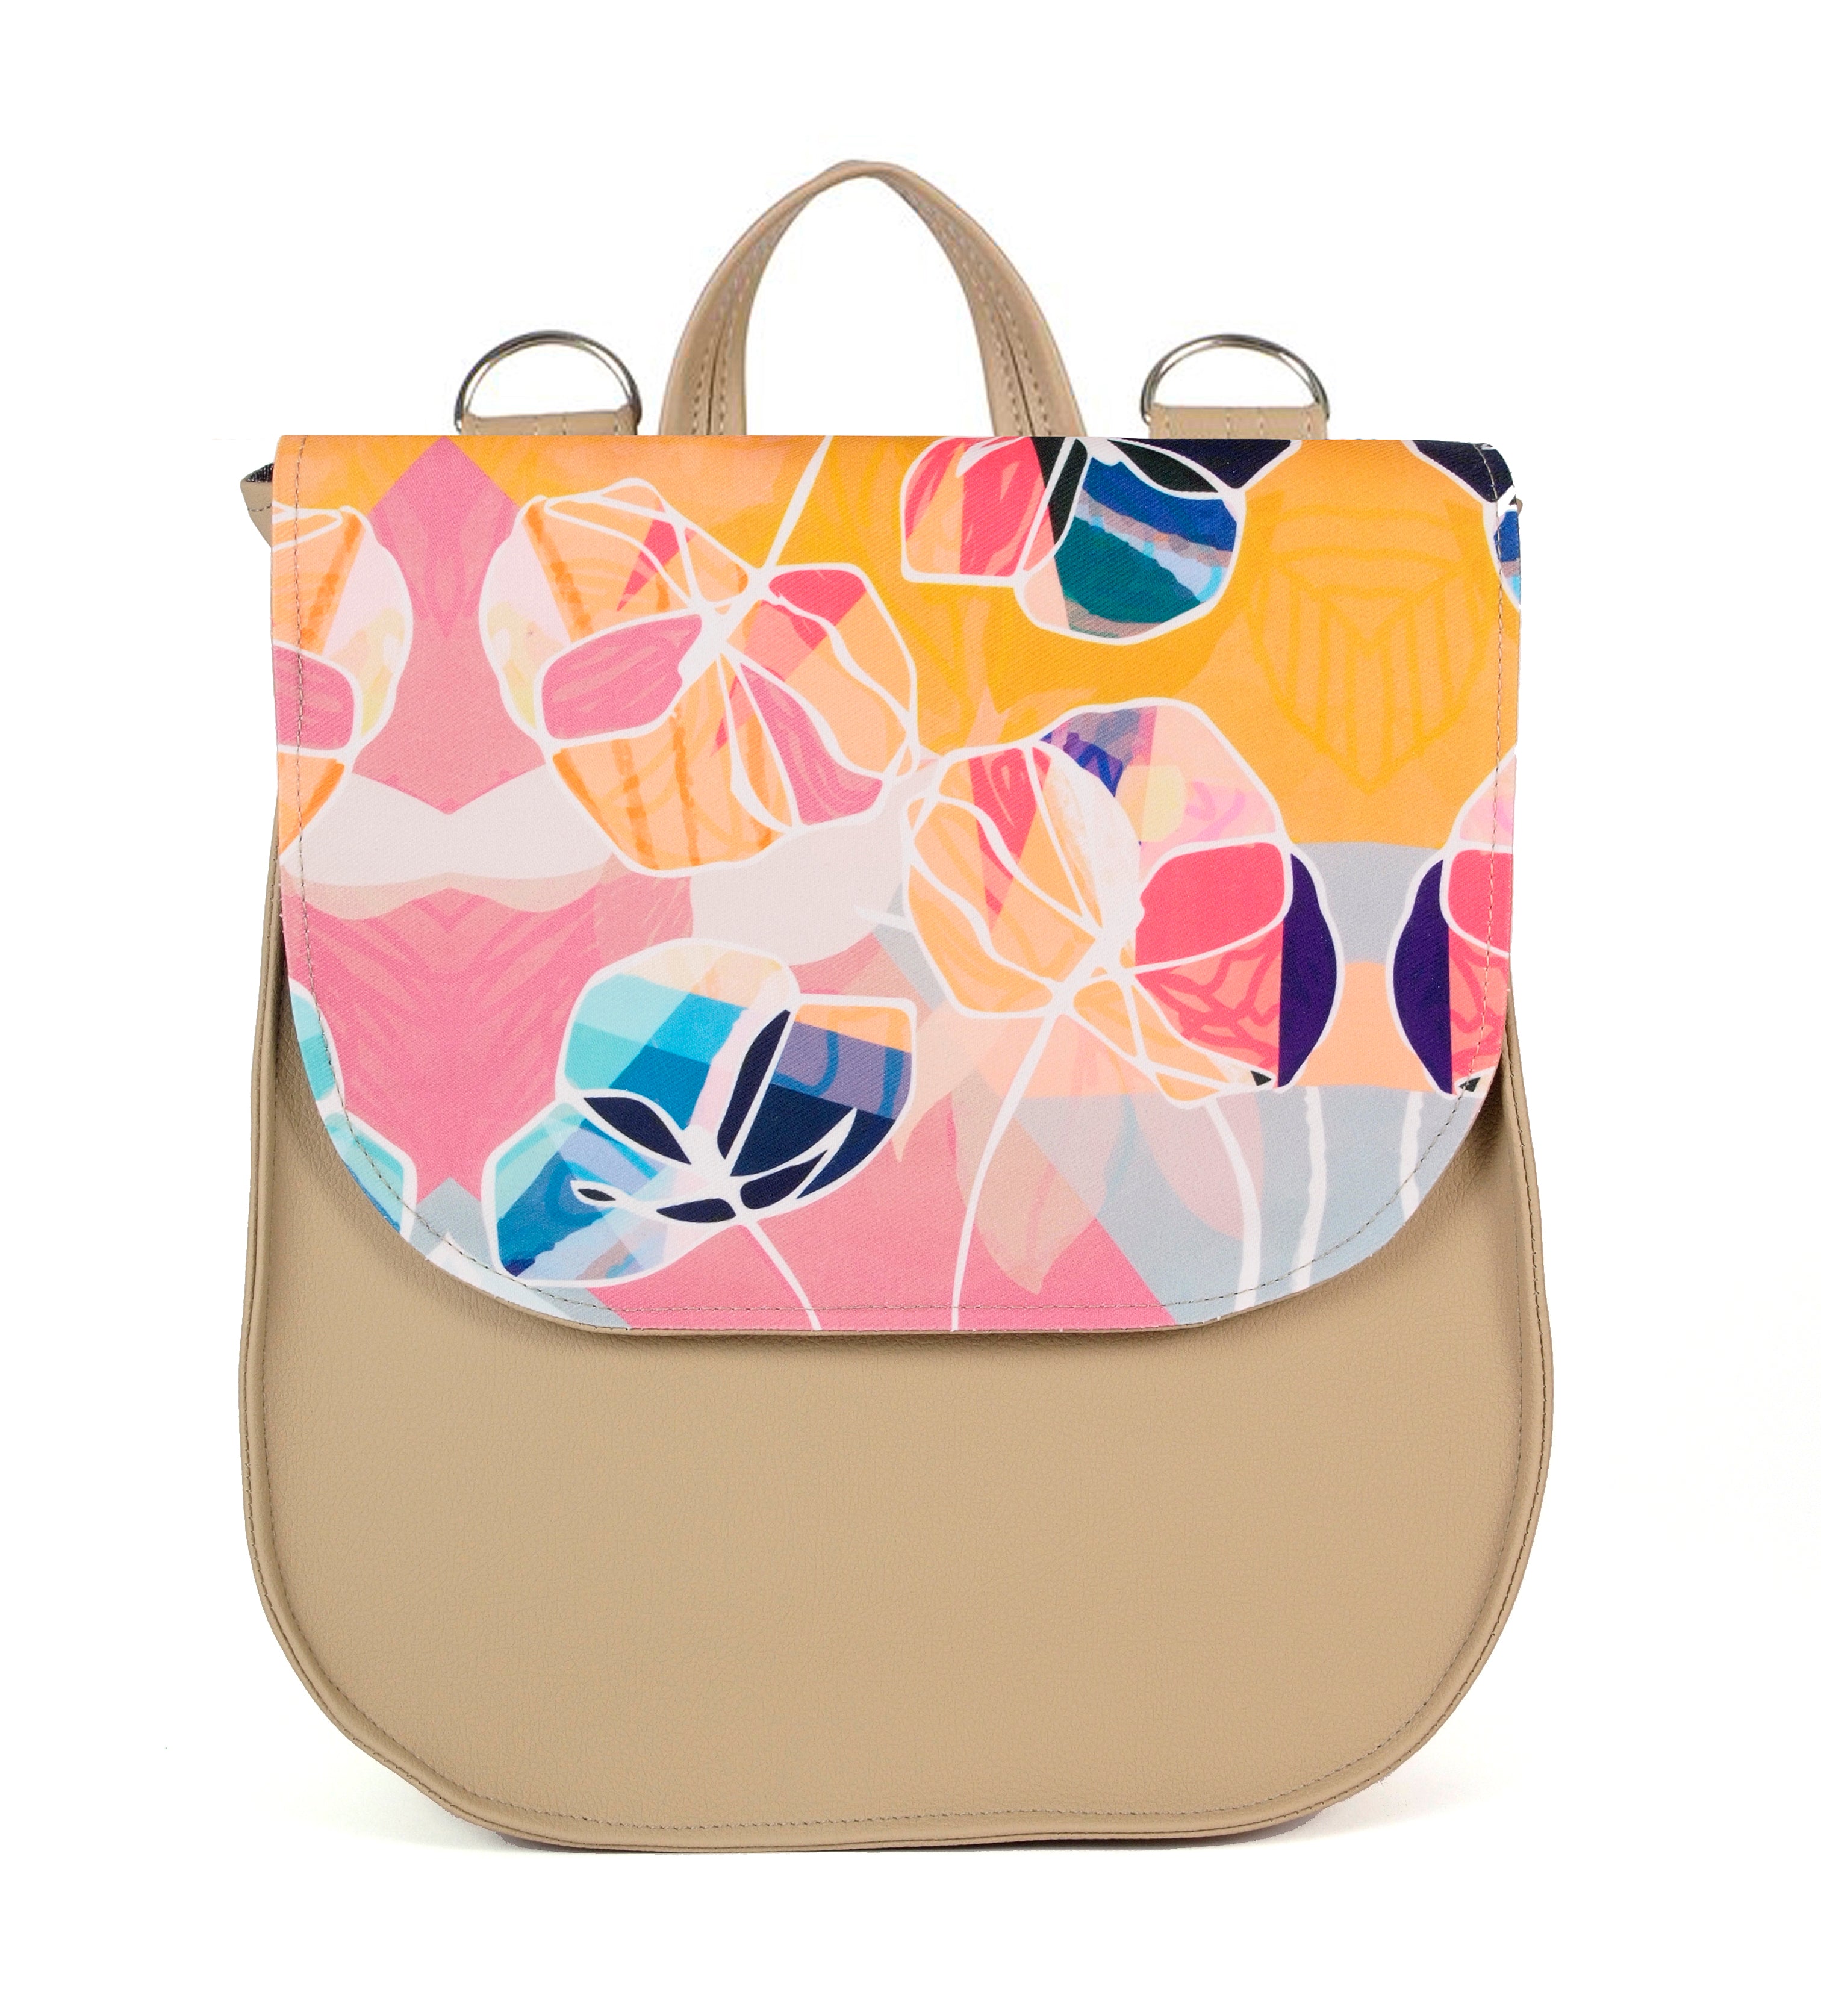 Bardo backpack&bag - Colorful fantasy